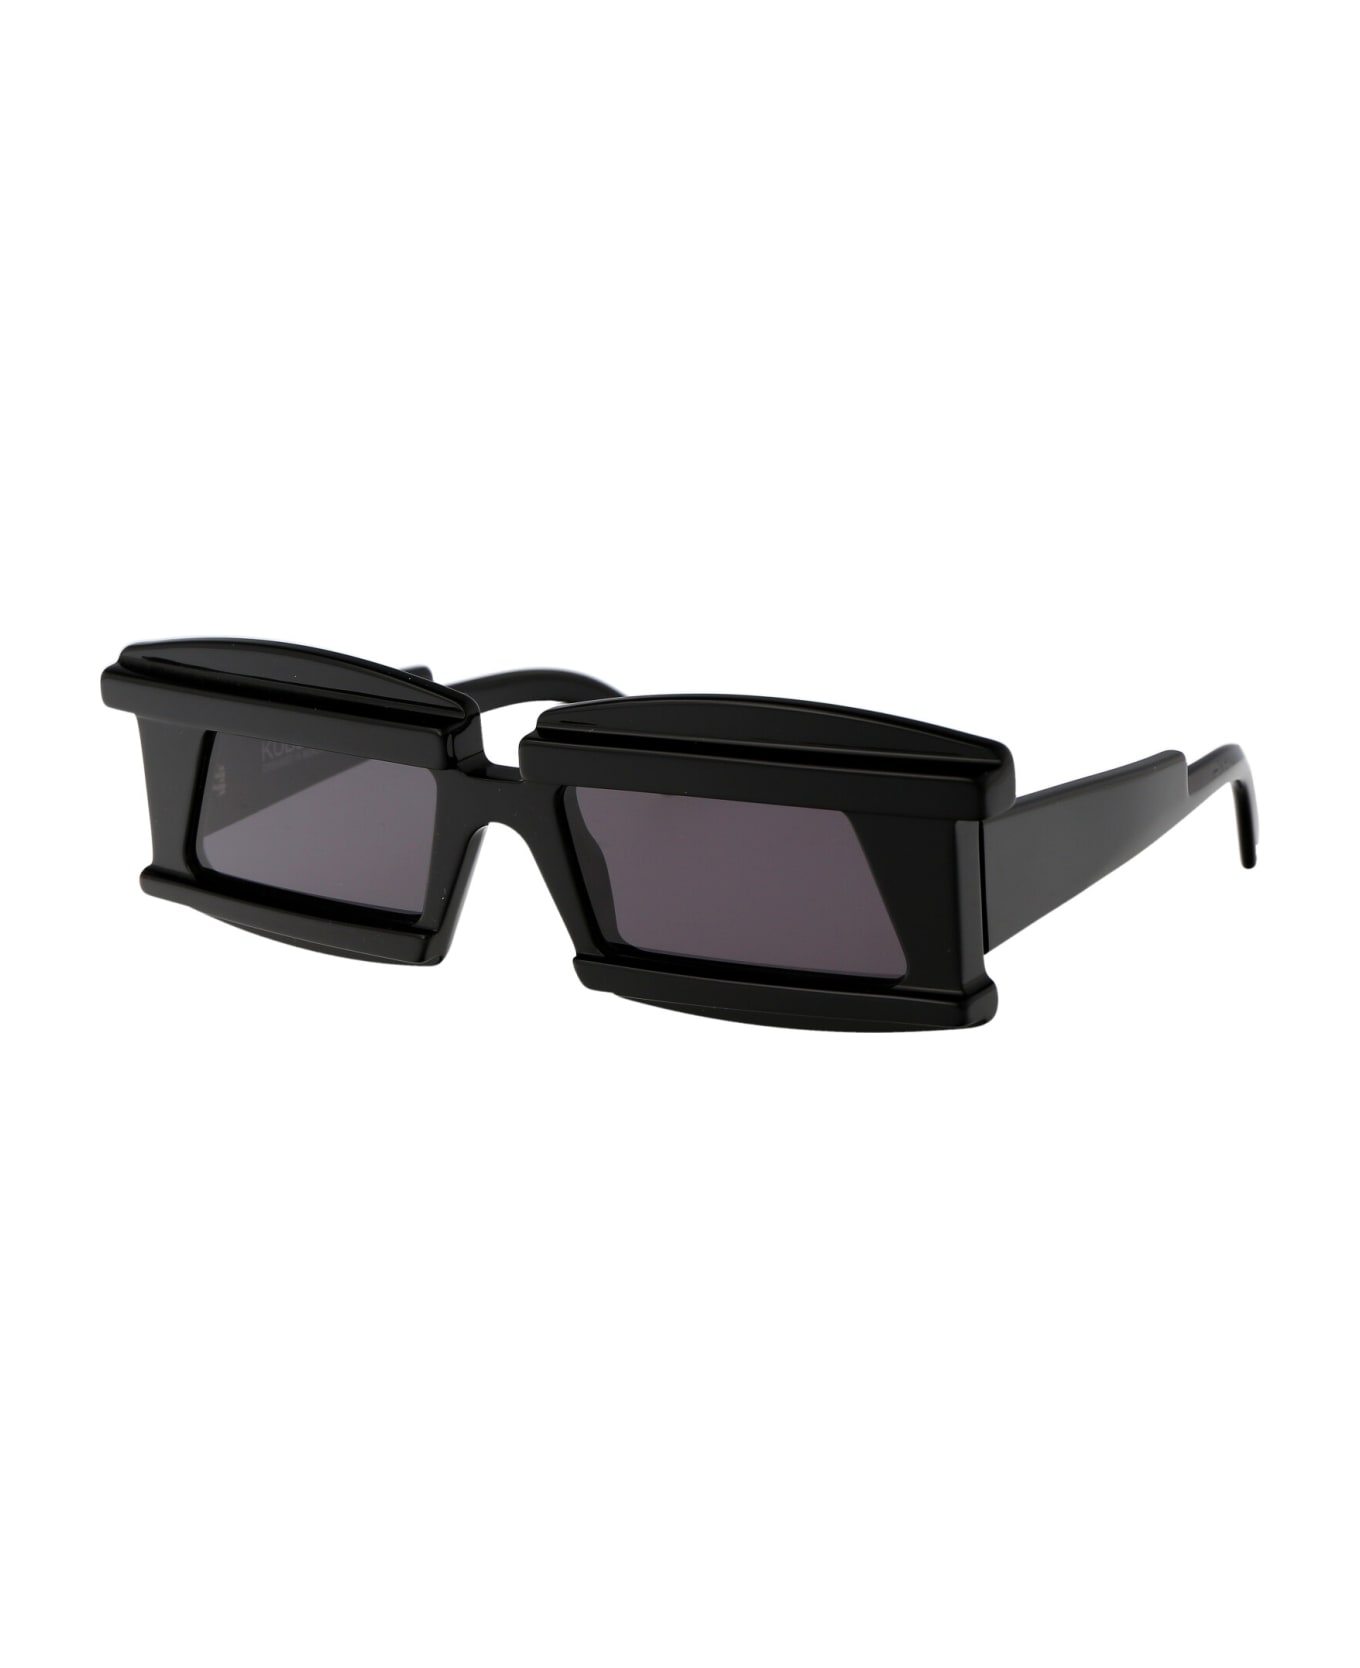 Kuboraum Maske X21 Sunglasses -  BS 2grey